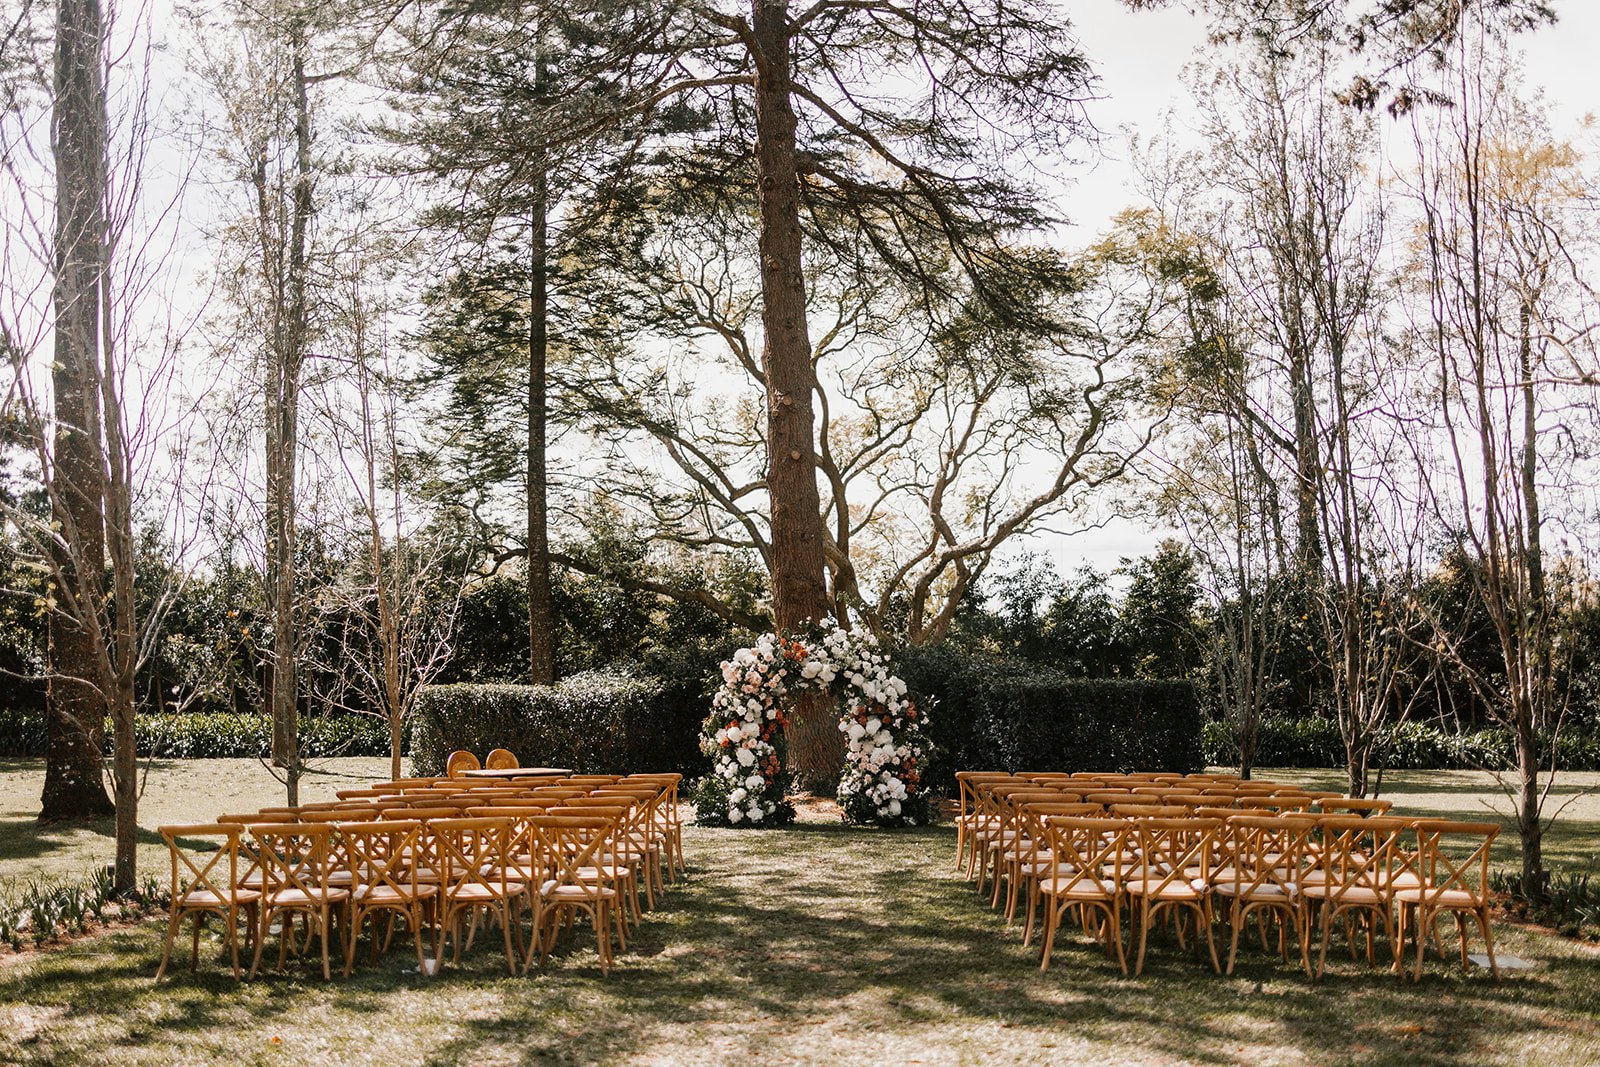 Wedding ceremony location with flowers